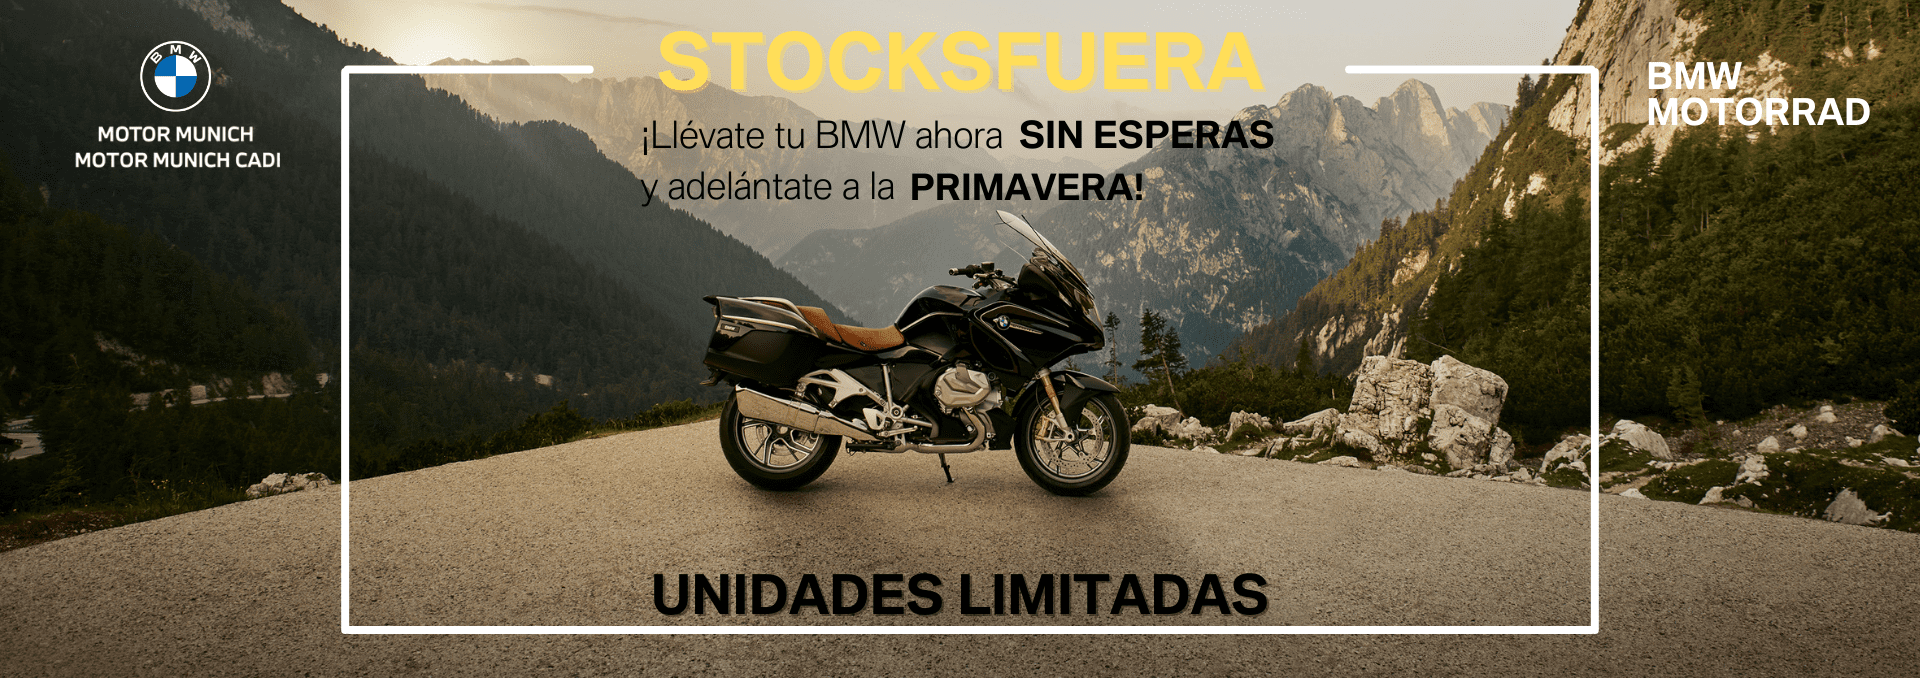 BMW MOTORRAD STOCKSFUERA